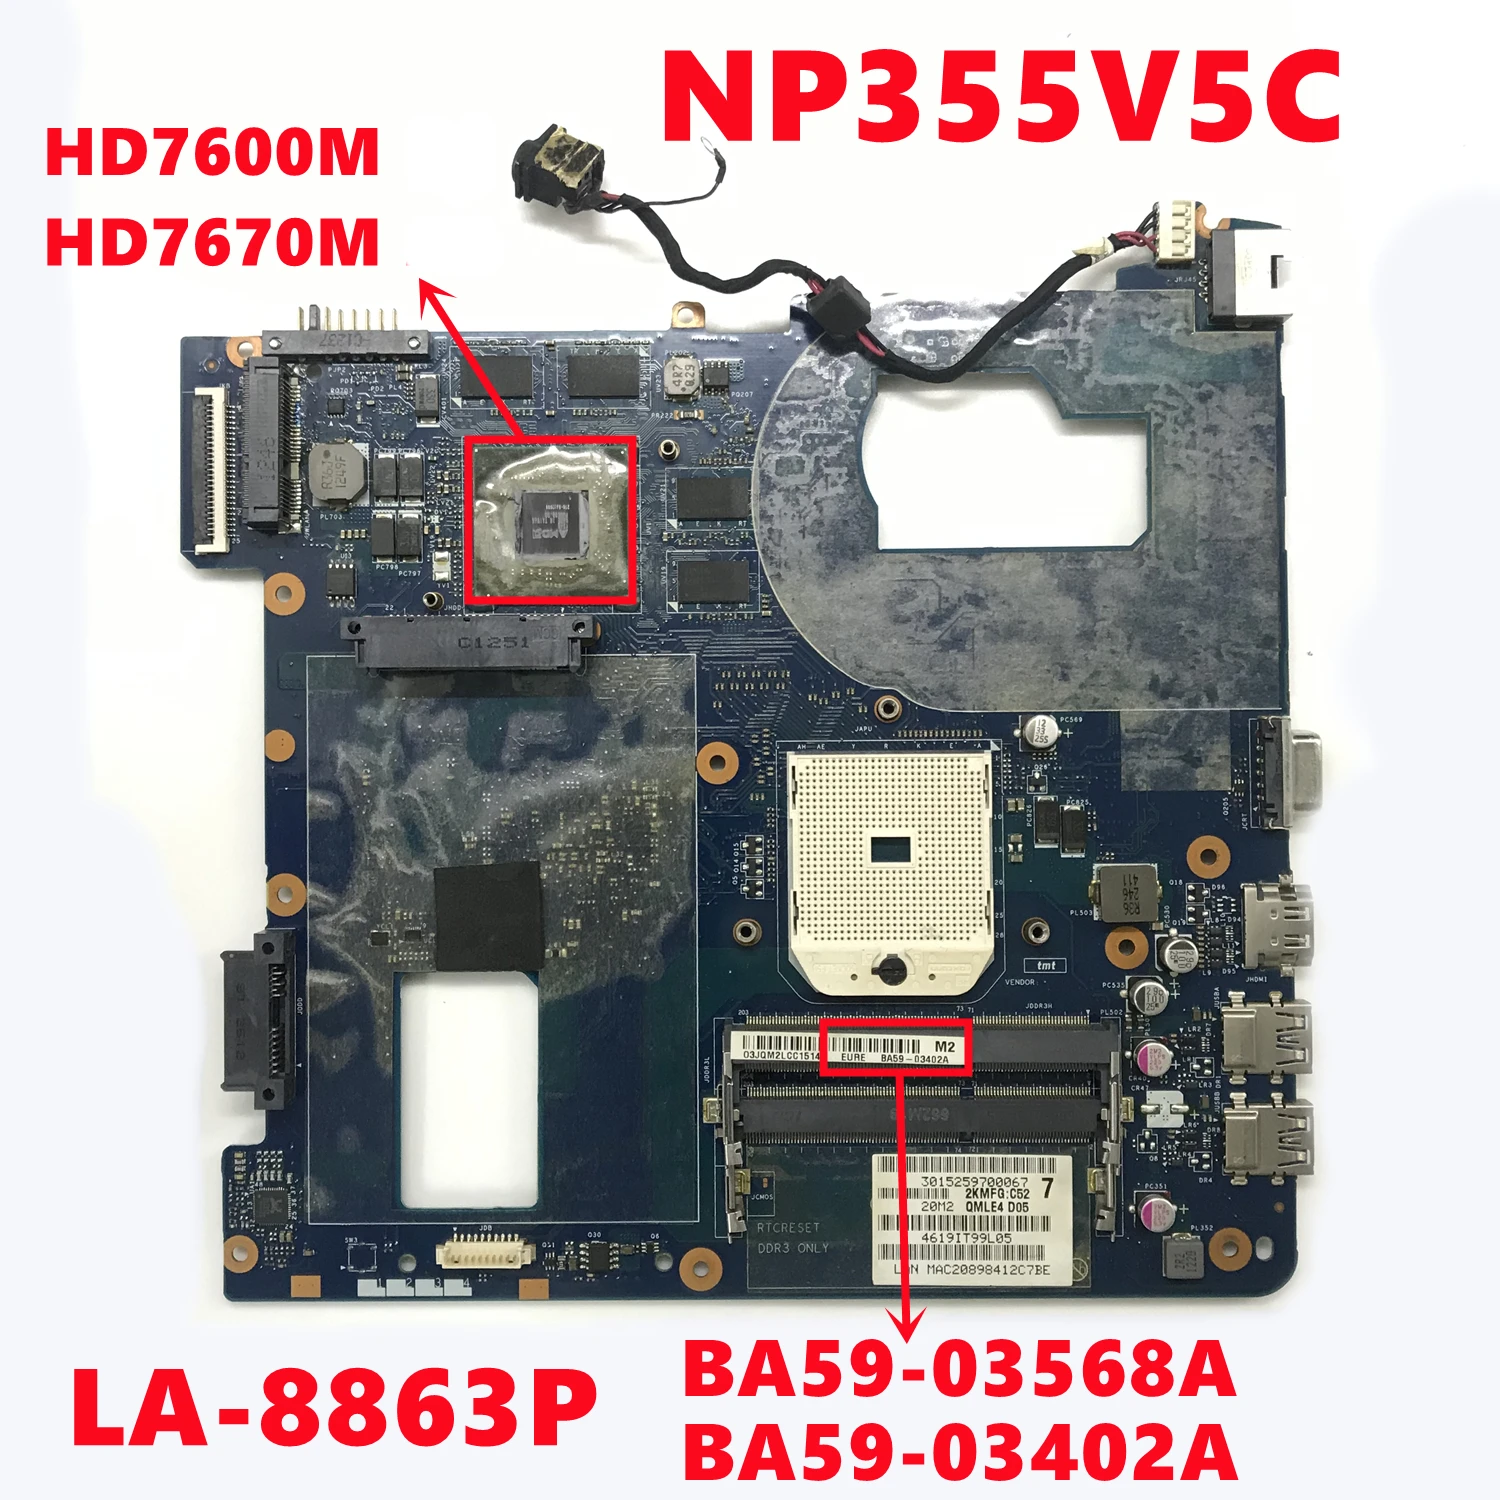 BA59-03568A BA59-03402A For SAMSUNG NP355 355V5C NP355V5C Laptop Motherboard QMLE4 LA-8863P With HD7600M HD7670M GPU 100% Tested